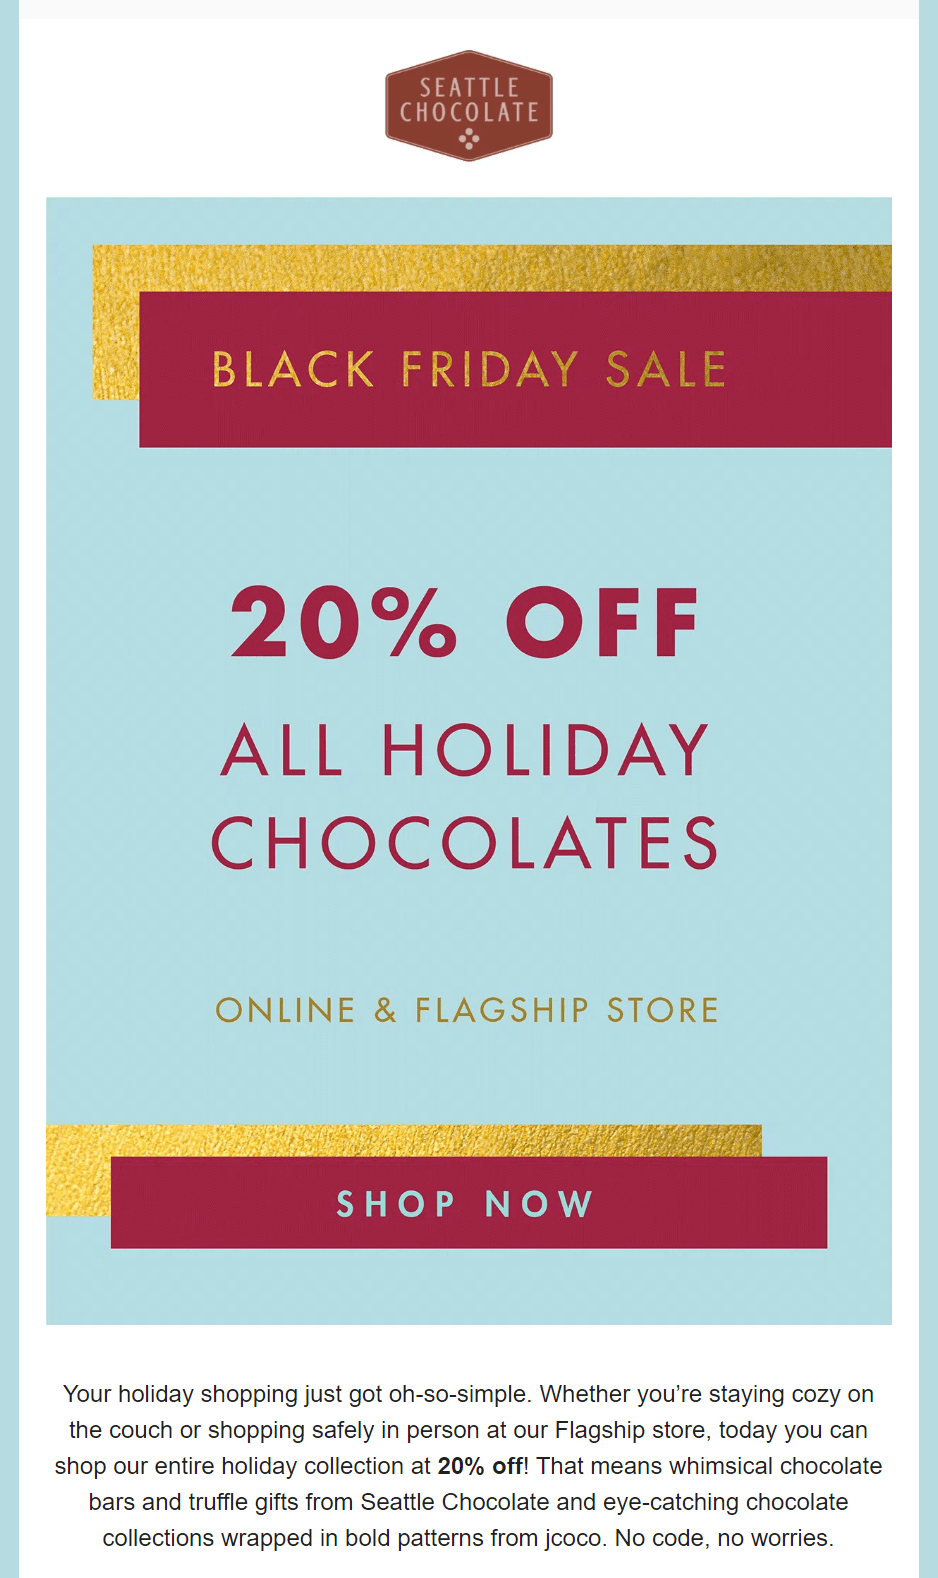 Seattle Chocolate Company Holiday Marketing Ideas 1 holiday marketing ideas